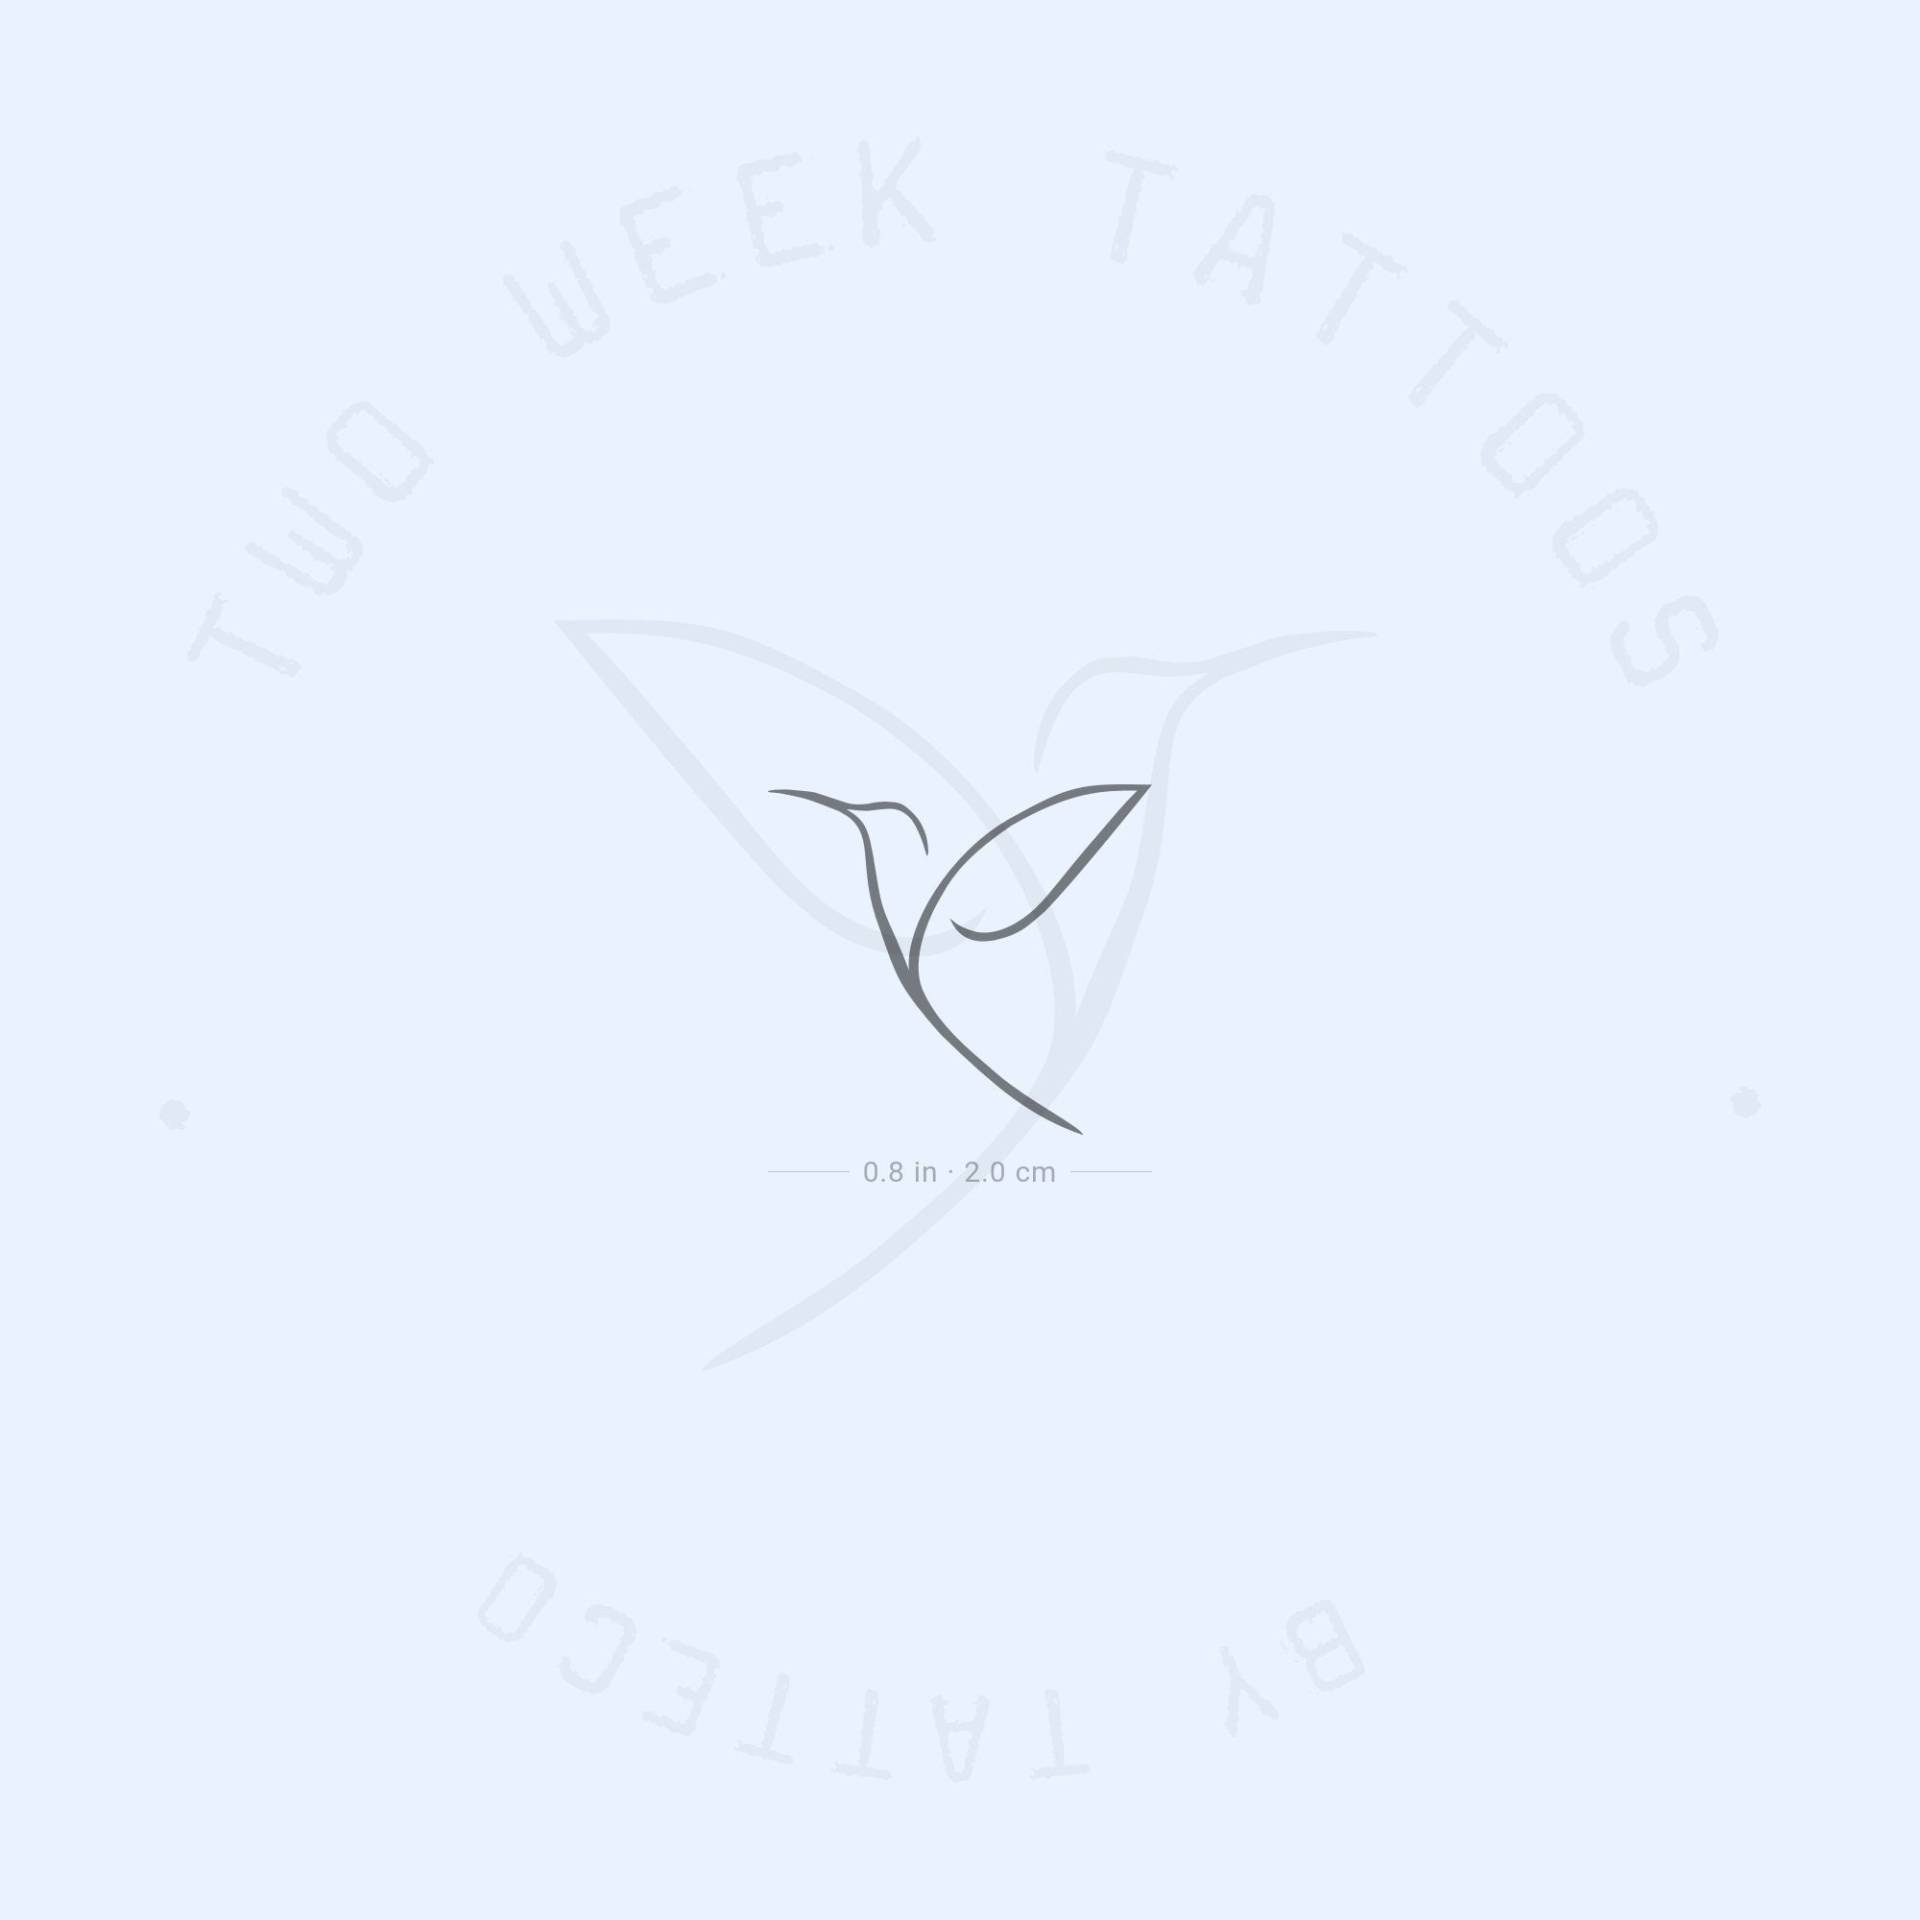 Minimalist Kolibri Semi-Permanent Tattoo | 2Er Set von Etsy - twoweektattoos